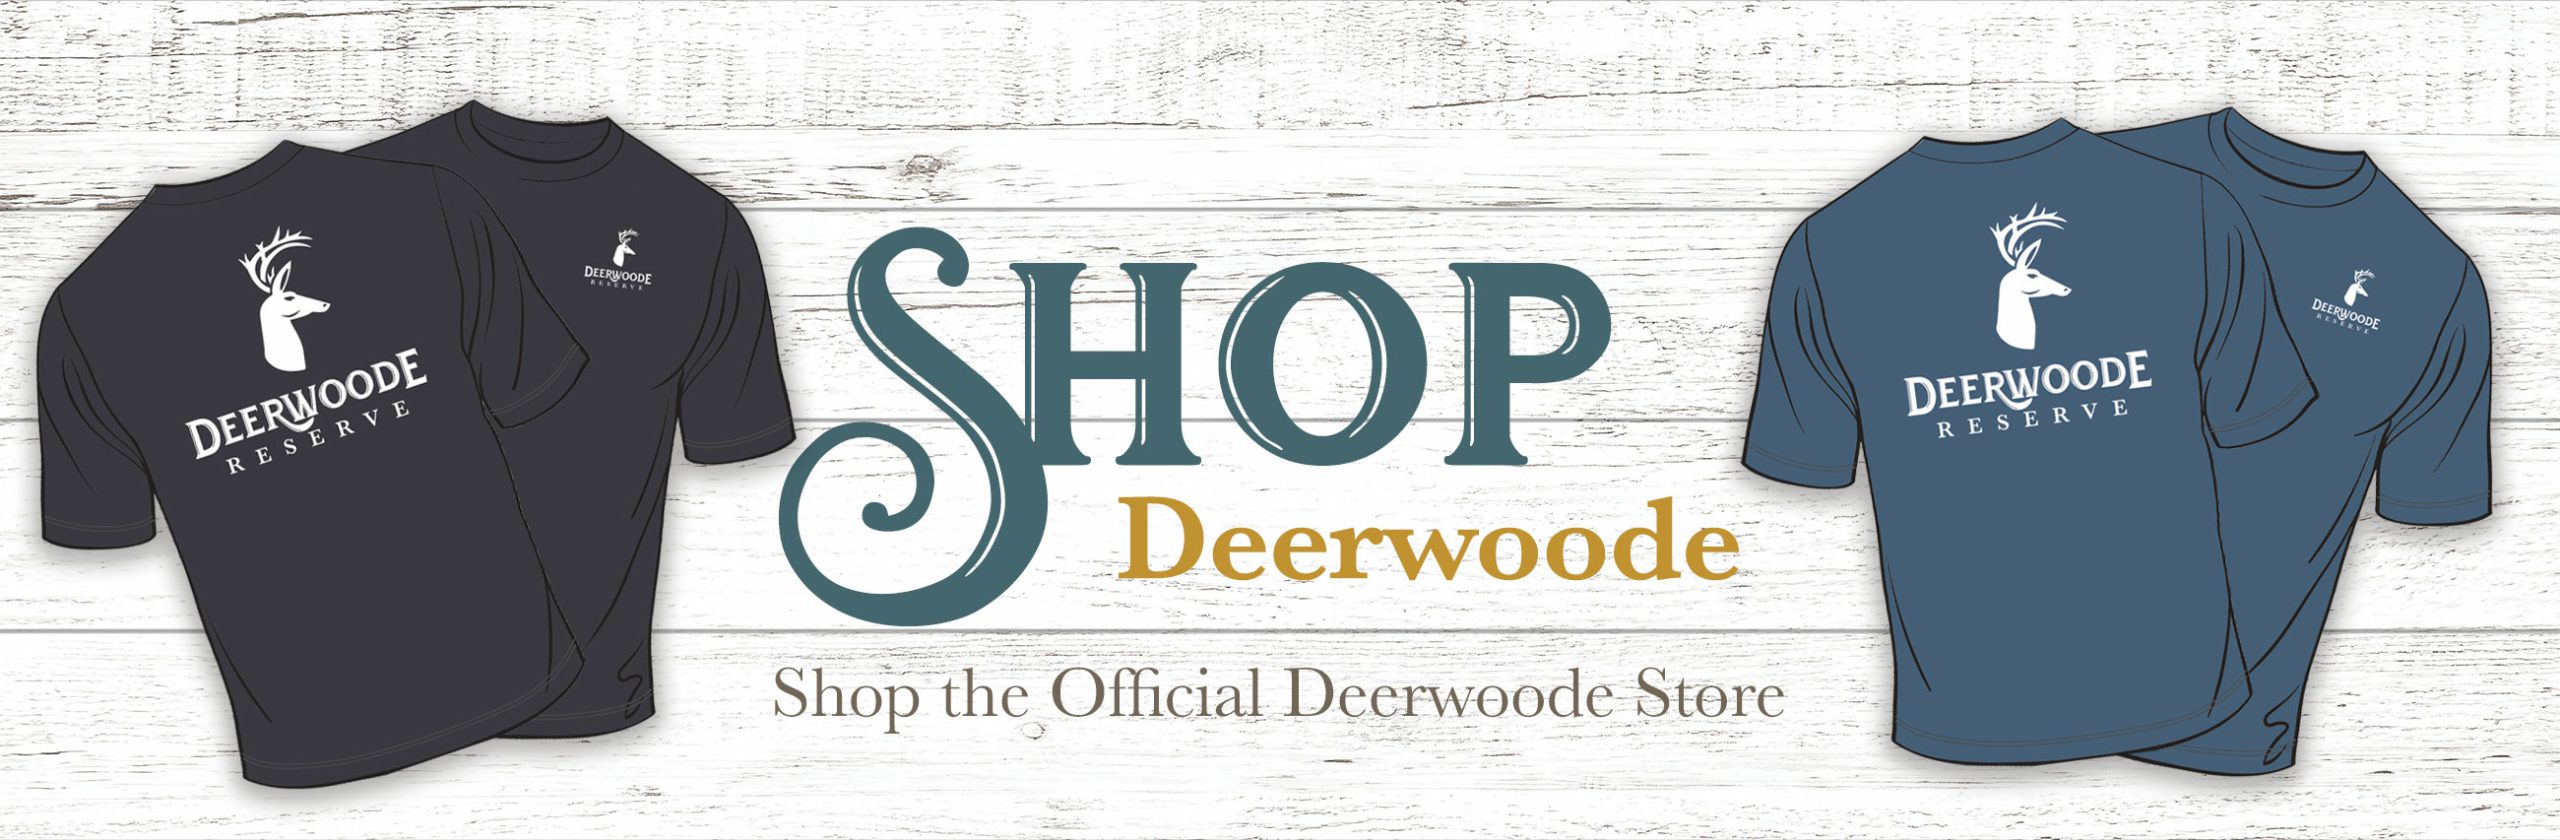 Deerwoode Reserve | Deerwood t-shirt with shop deerwood words.